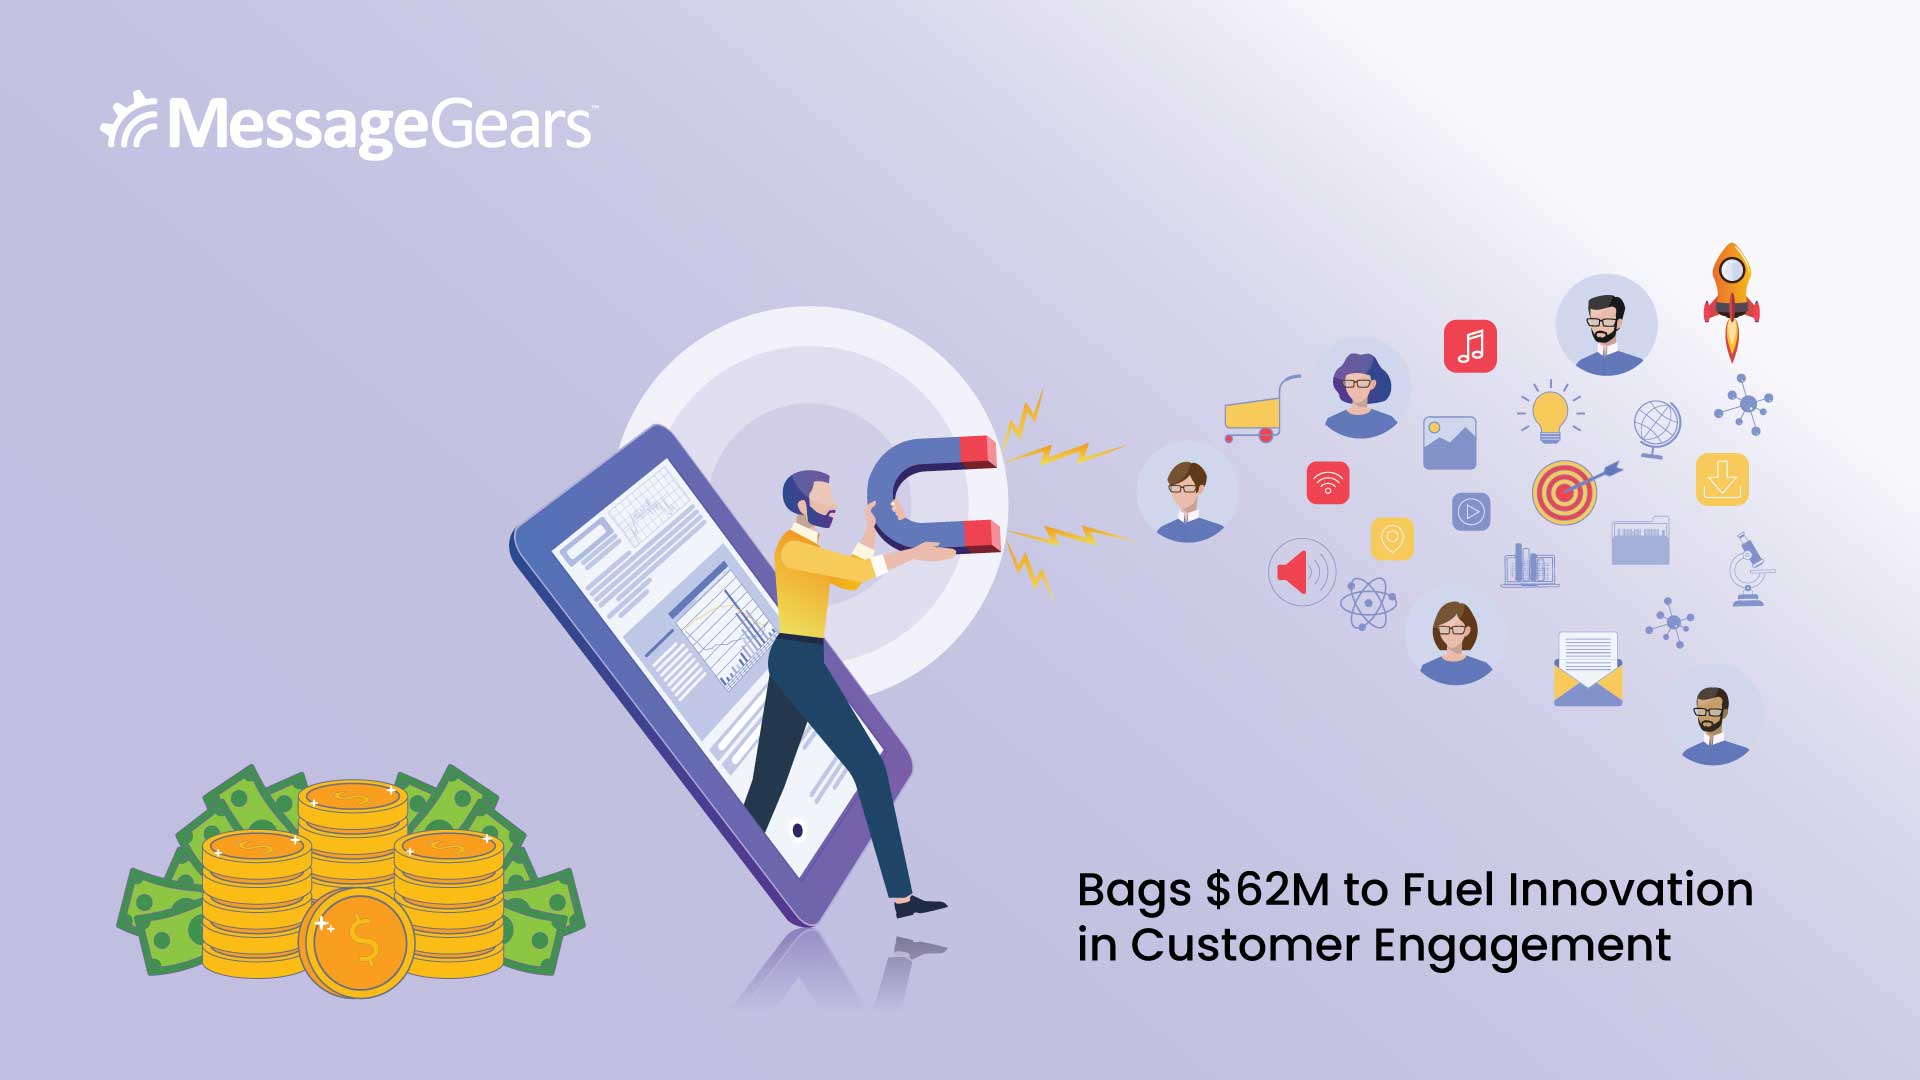 MessageGears Raises $62M to Fuel Innovation in Customer Engagement